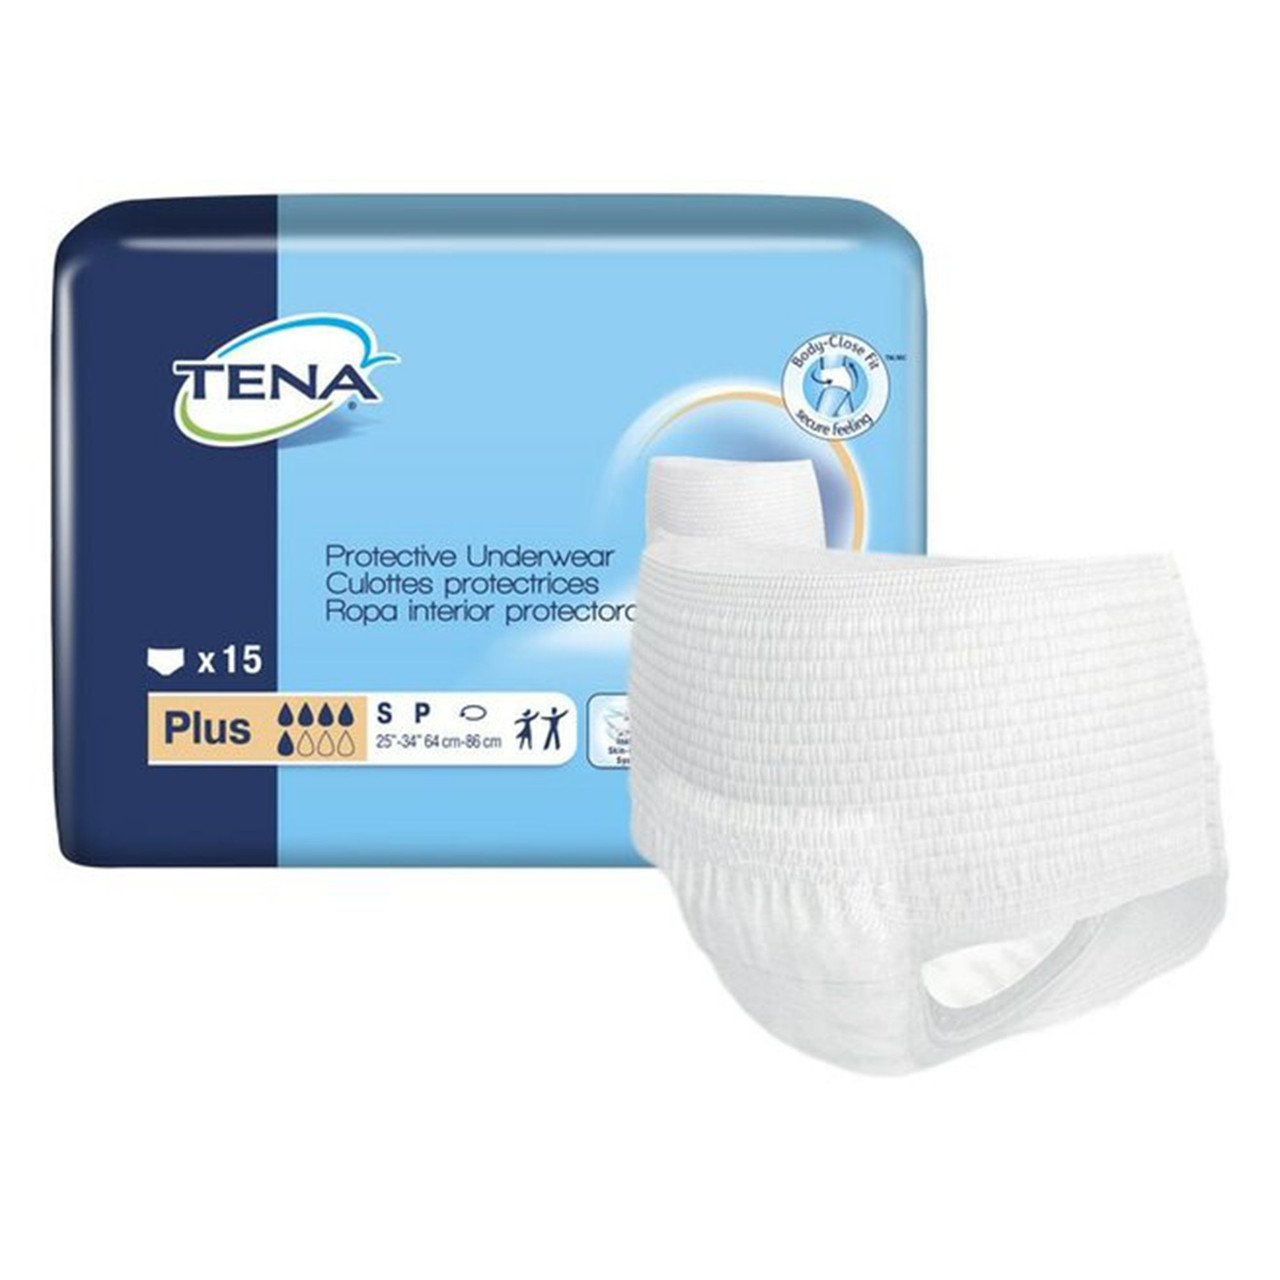 TENA Plus Incontinence Underwear, Moderate Absorbency - Unisex